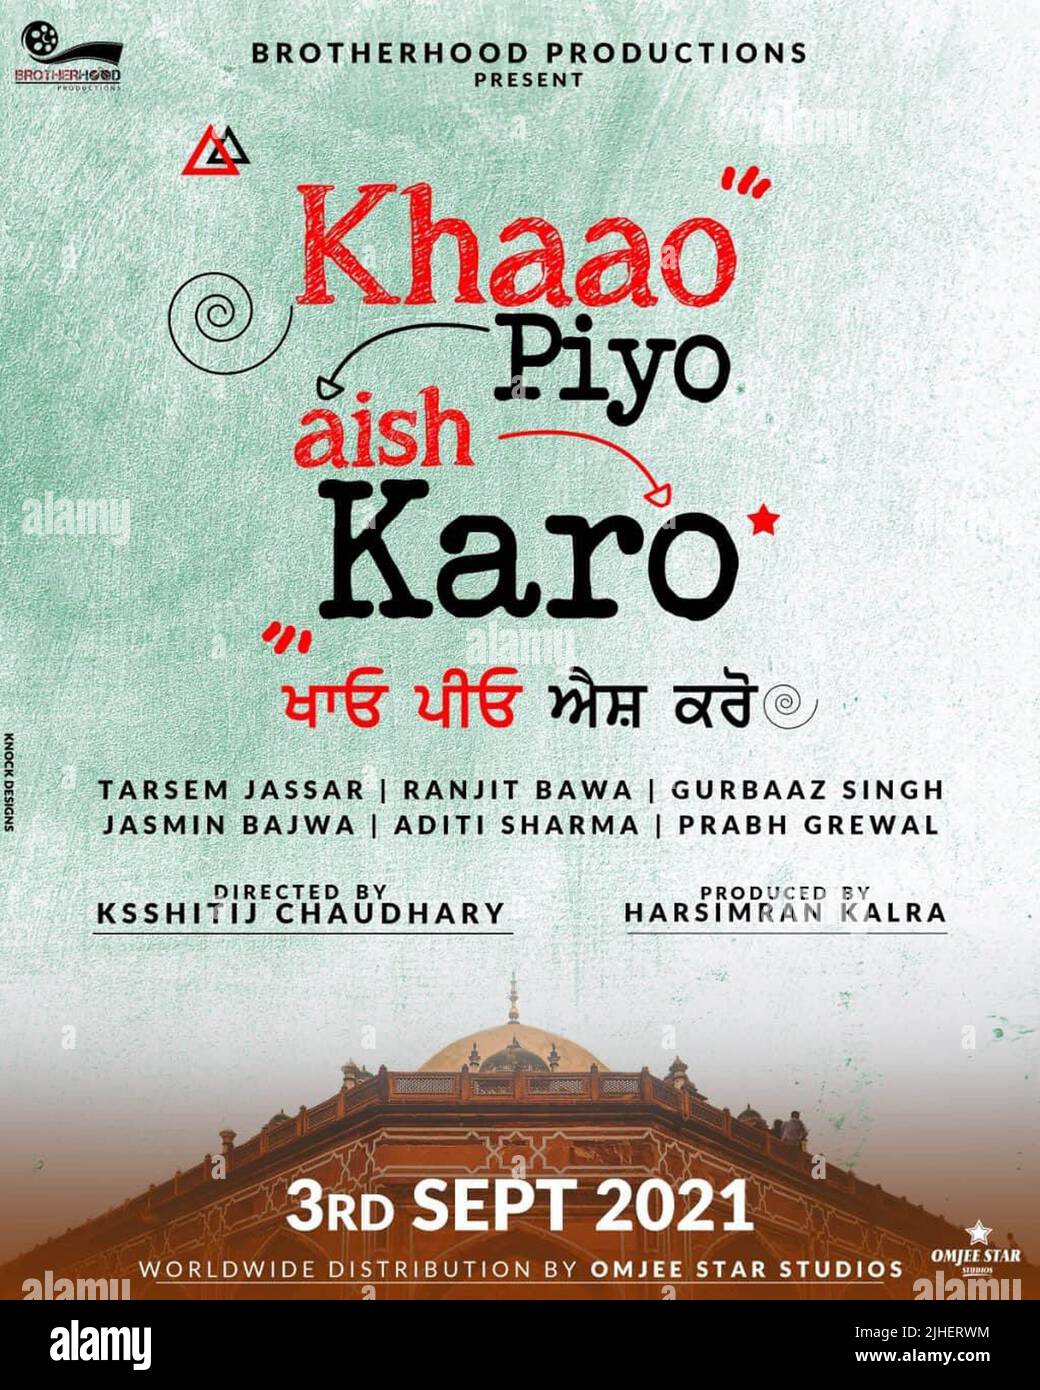 KHAAO PIYO AISH KARO 2022 de Ksshitij Chaudhary Prod DB © Brotherhood Productions affiche indienne Stock Photo